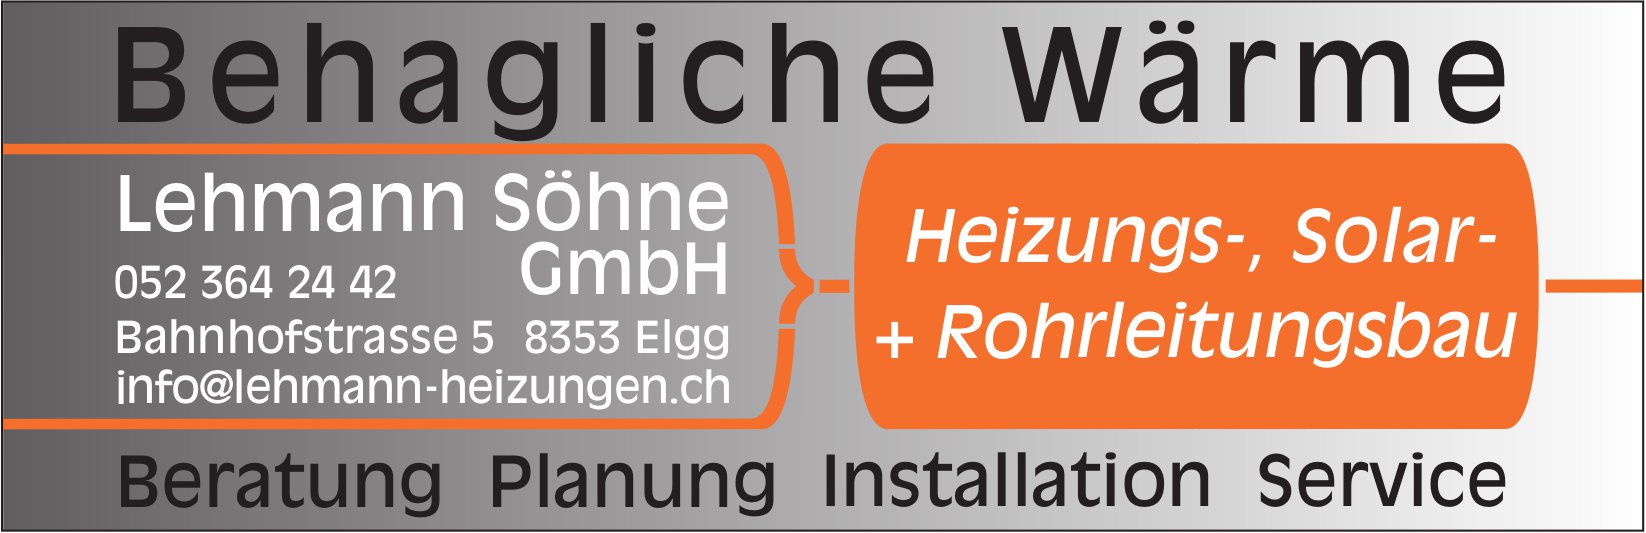 Lehmann Söhne GmbH, Elgg - Behagliche Wärme